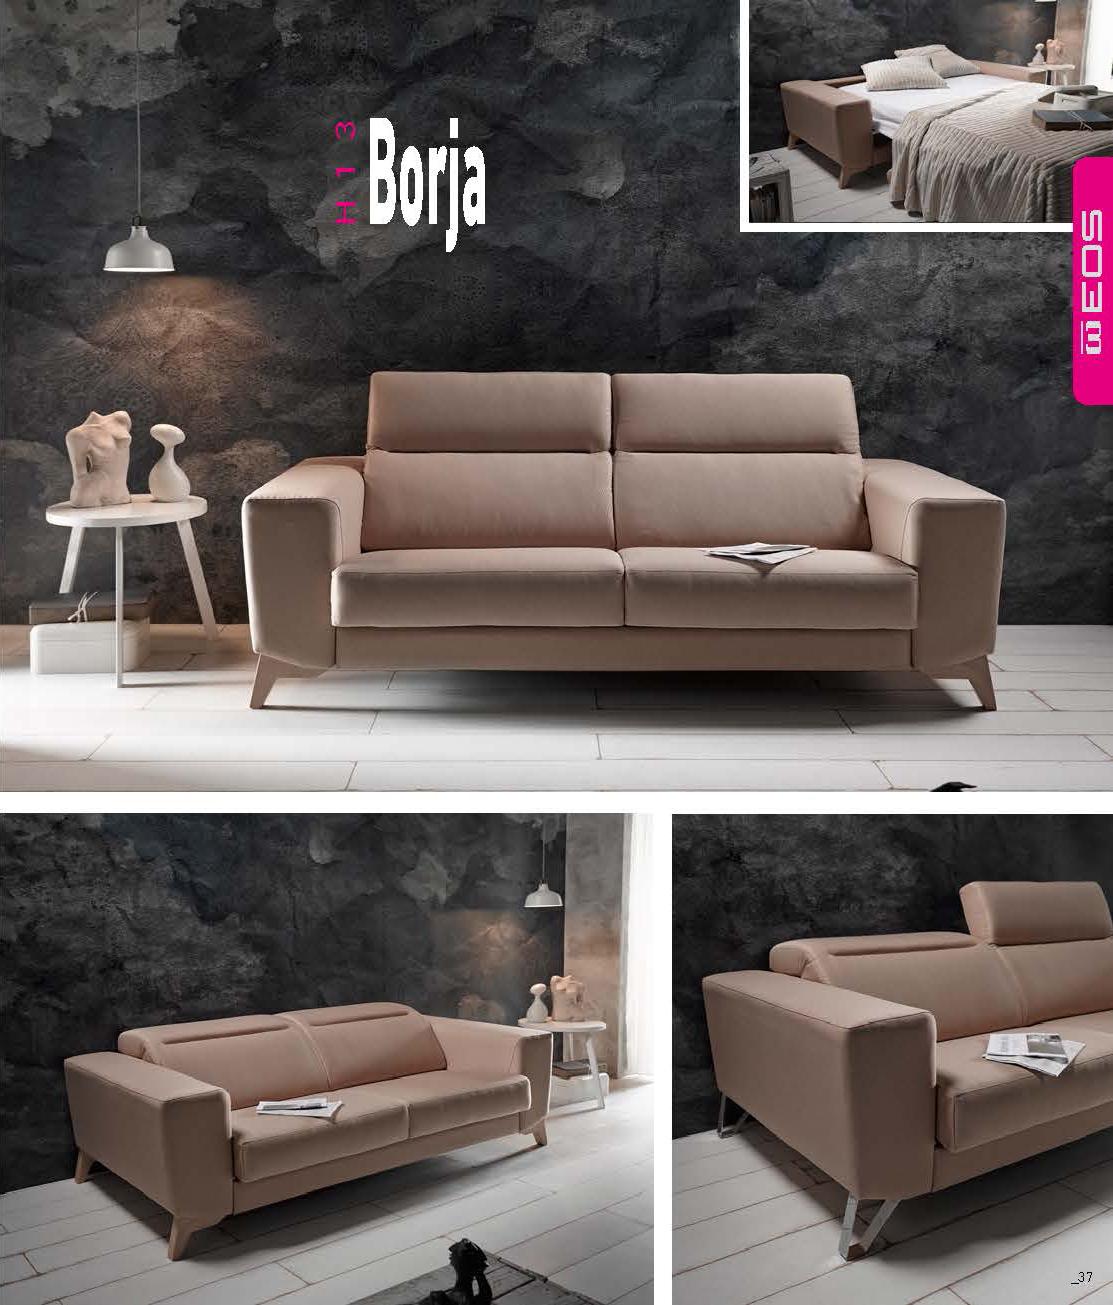 

    
EFS Borja Modern Desert Sand Leather Futon Sofa Sleeper Bed SPECIAL ORDER
